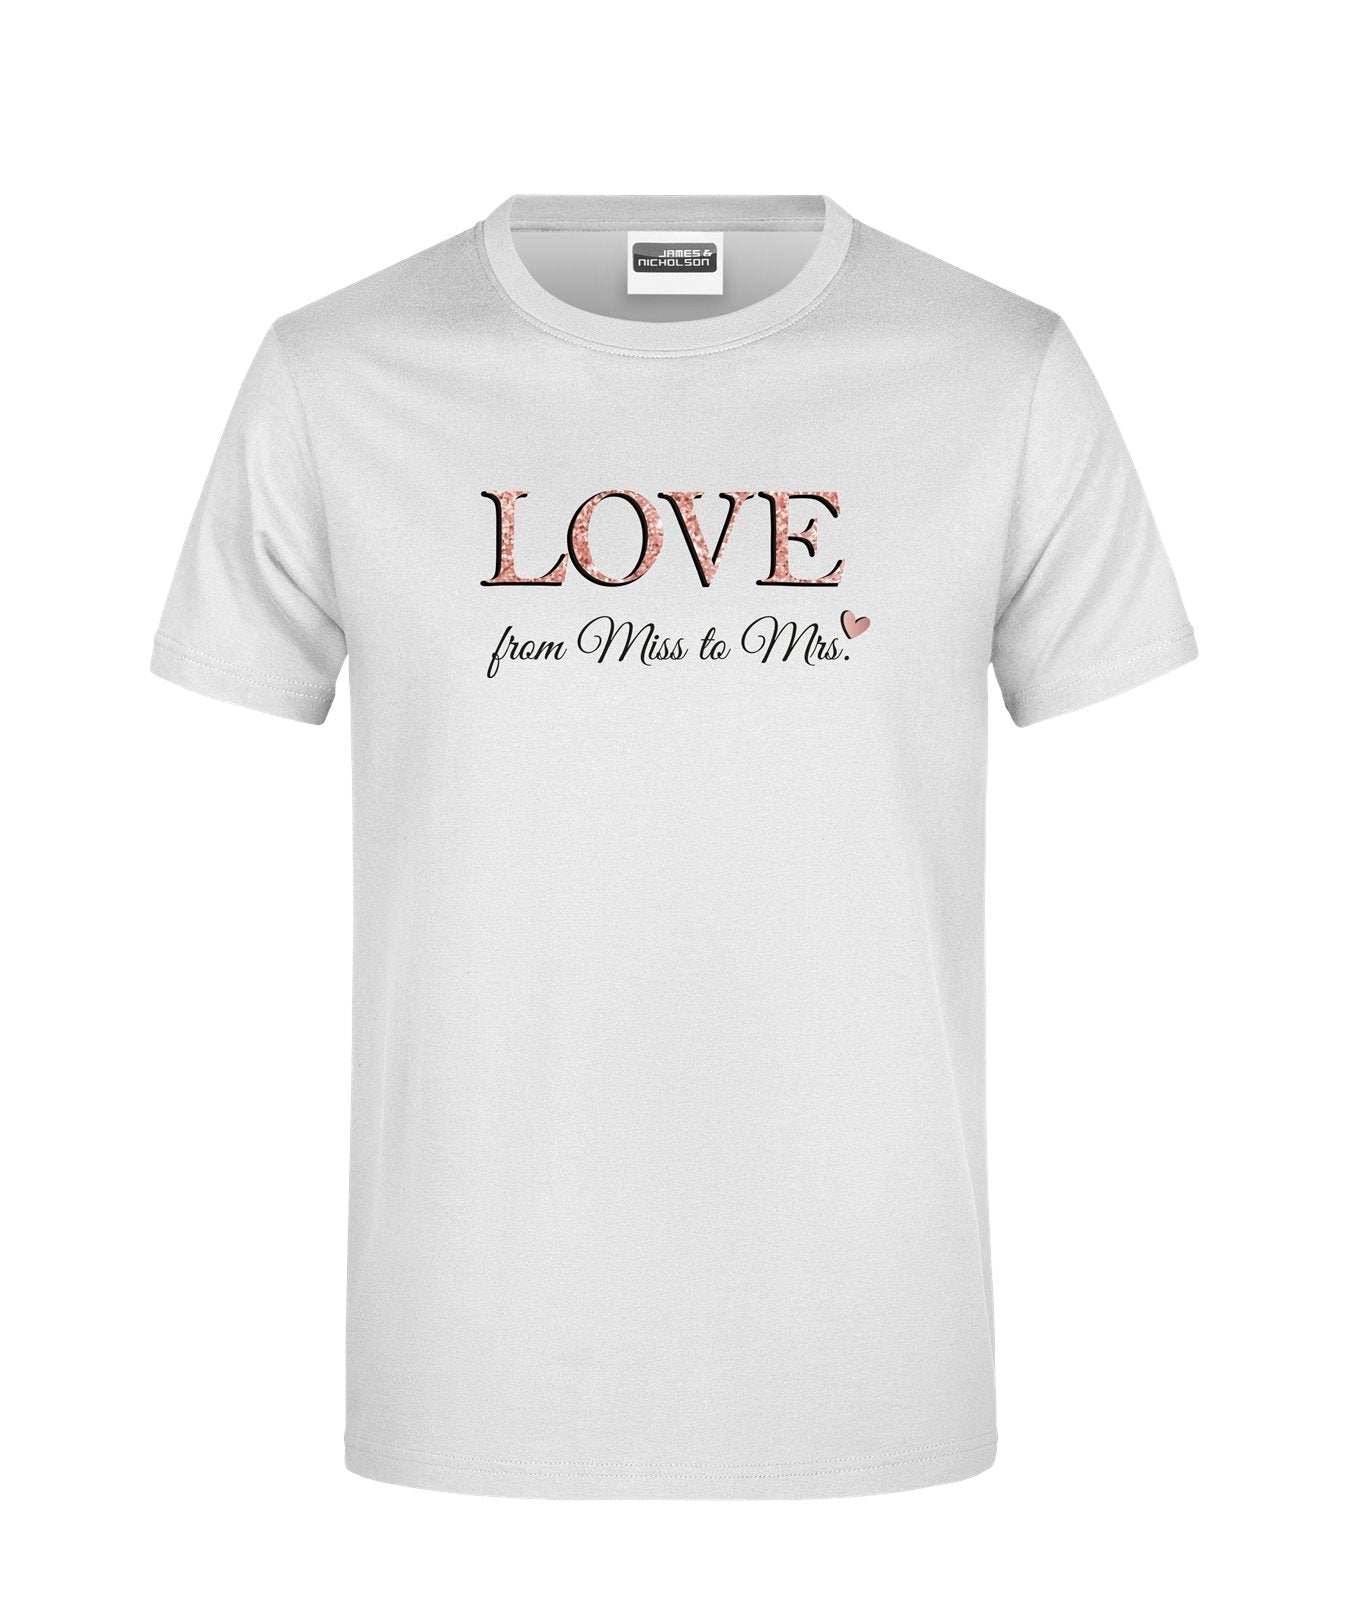 Bild: T-Shirt - LOVE from Miss to Mrs. Geschenkidee